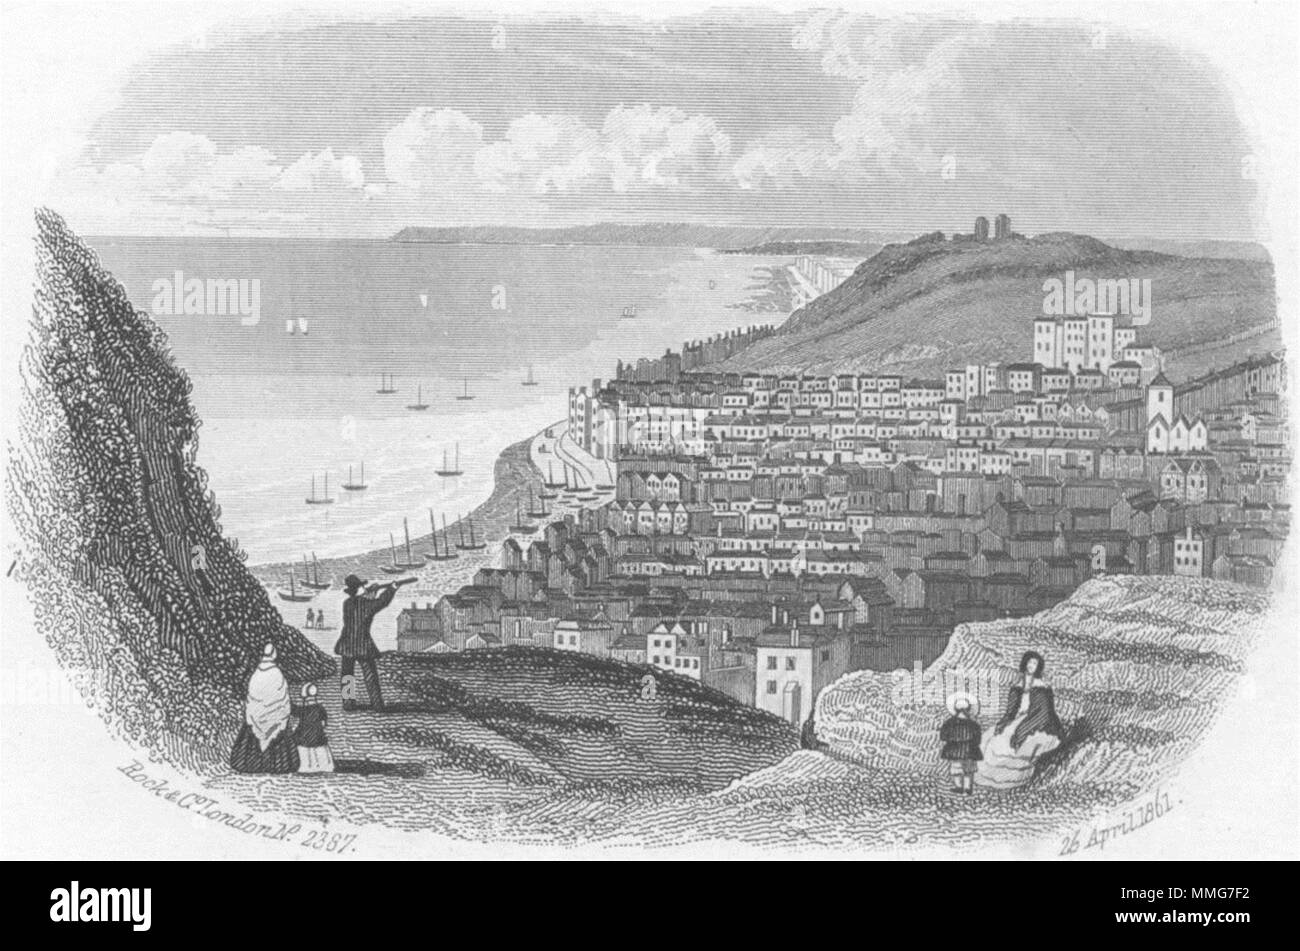 SUSSEX. Hastings Beachy Head & Pevensey Bay 1860 antica immagine di stampa Foto Stock